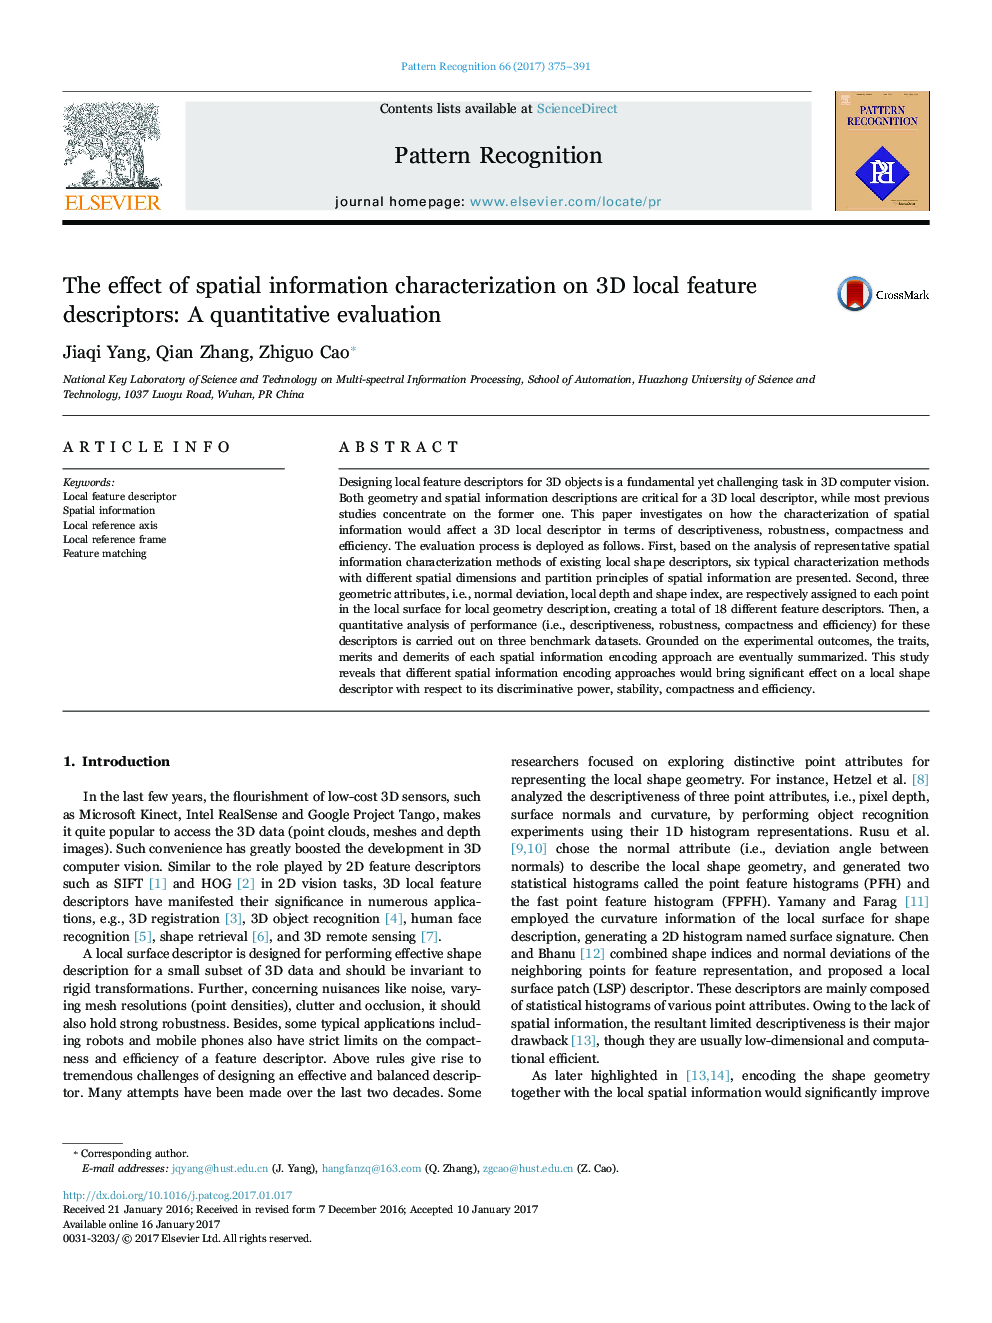 The effect of spatial information characterization on 3D local feature descriptors: A quantitative evaluation